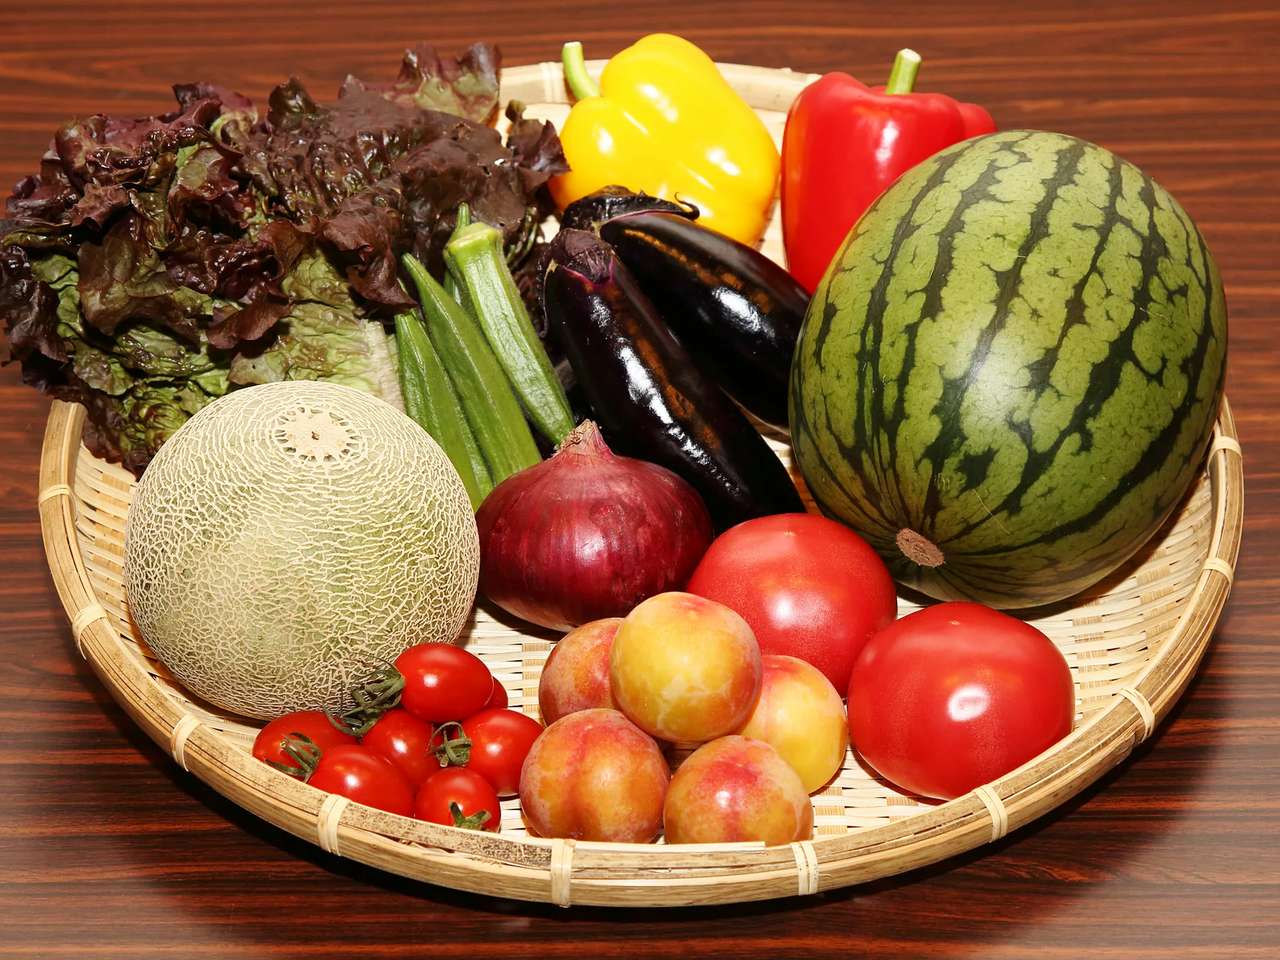 Frutas e vegetais puzzle online a partir de fotografia